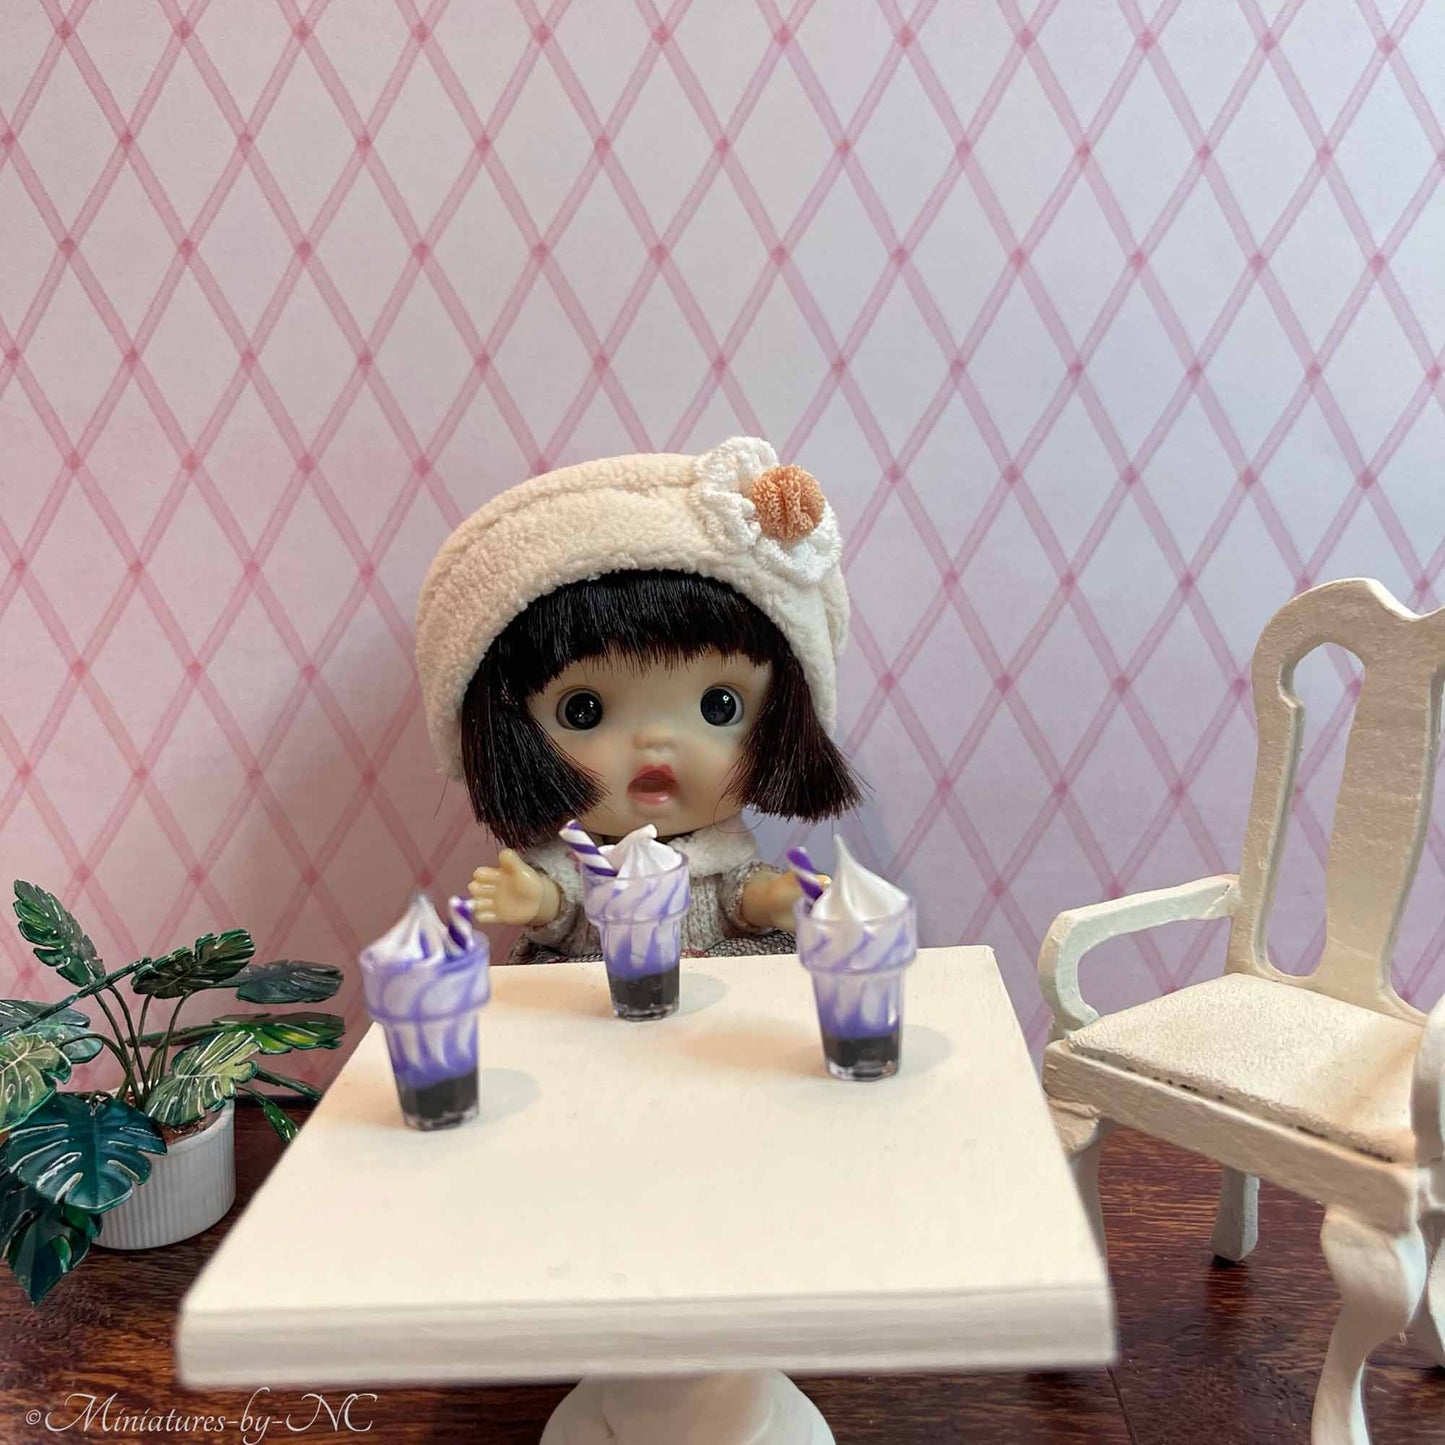 Miniature Sundae/ Ice Cream Parfait 1 12 Scale Dollhouse Accessory